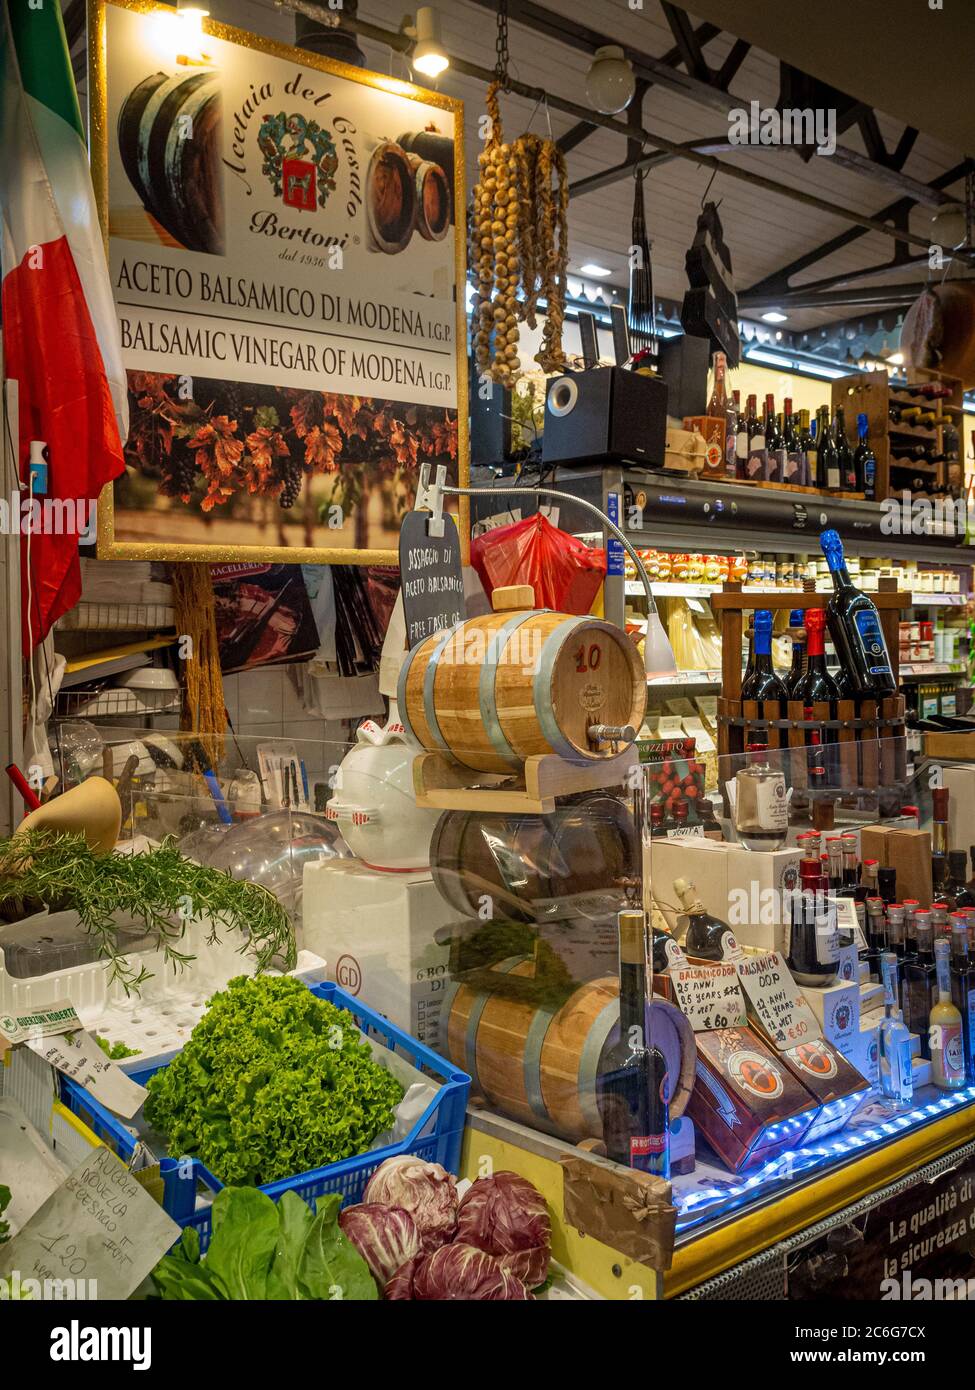 Balsamic vinegar stall at Mercato Albinelli, Modena, Italy. Stock Photo